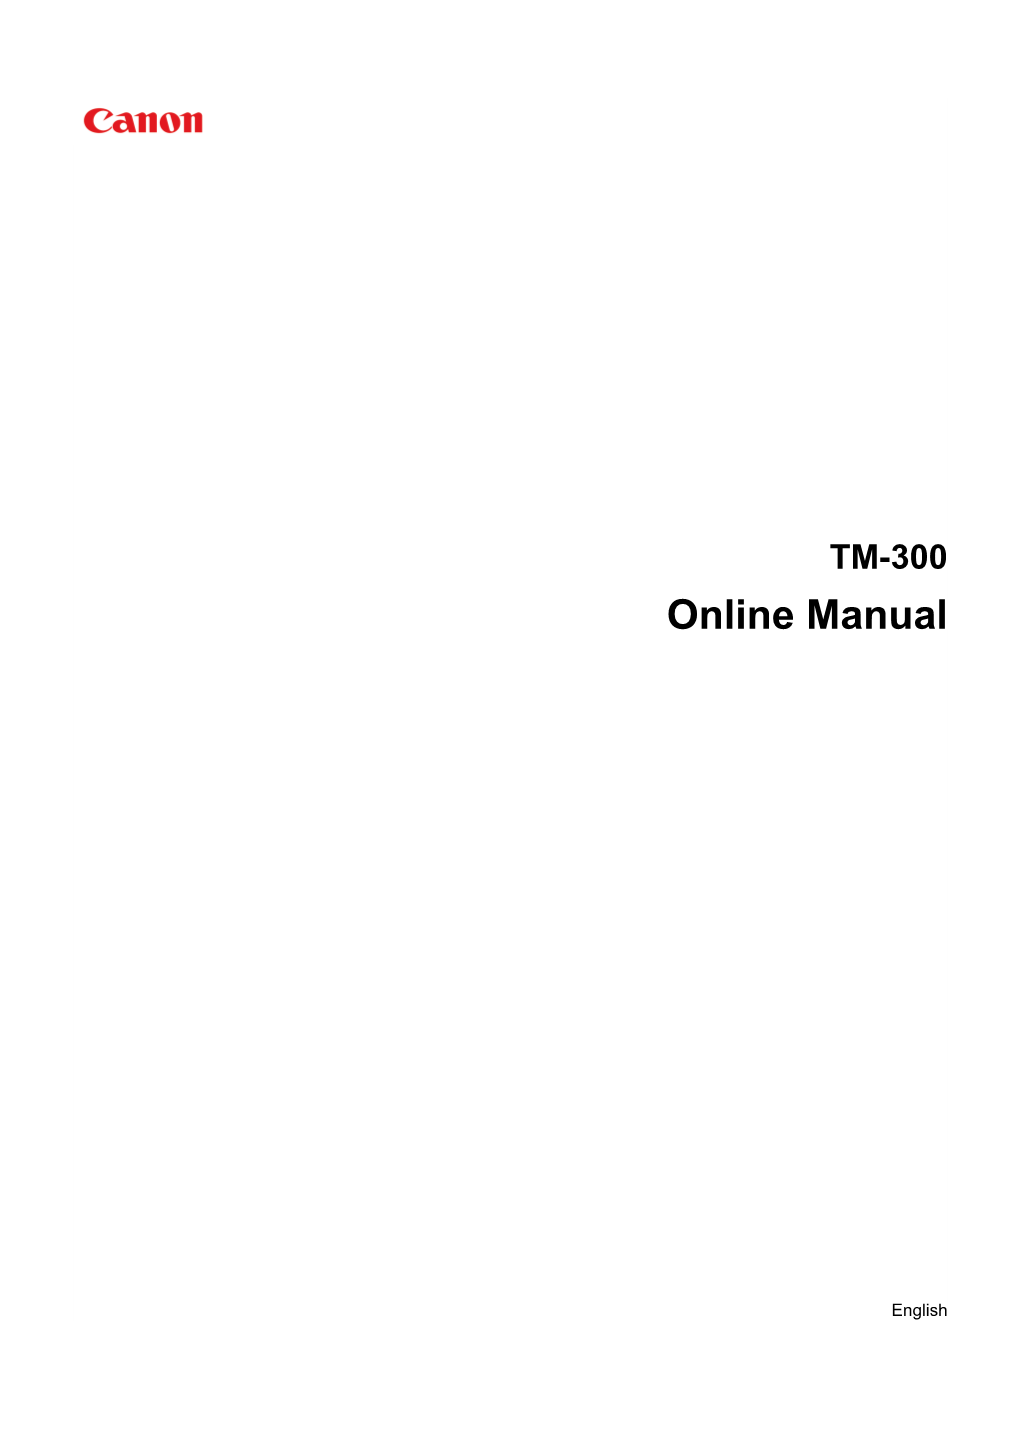 TM-300 Online Manual